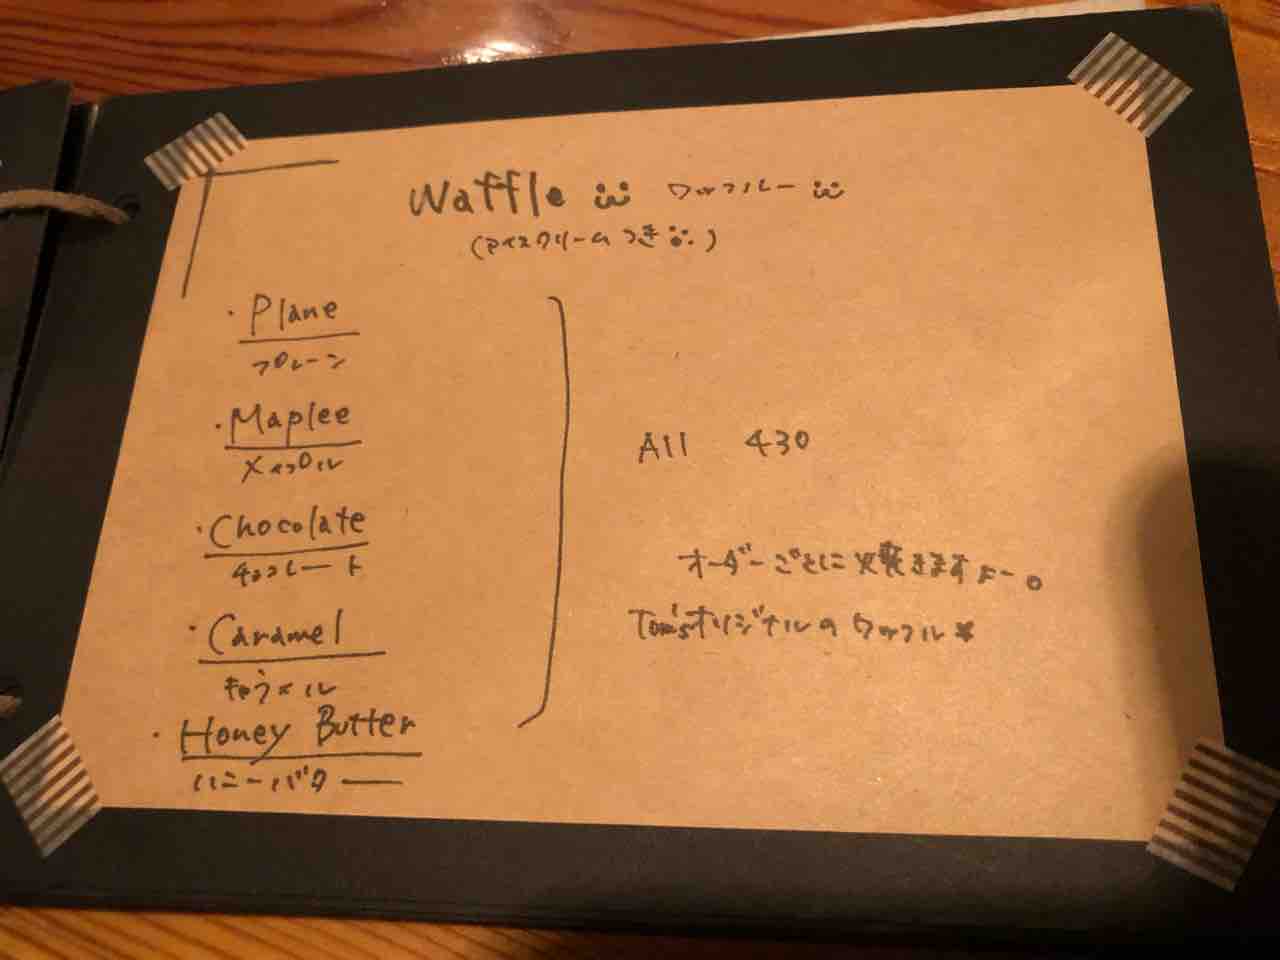 『TOM’S COFFEE INNOCENT』Waffle メニュー（アイスクリームつき）